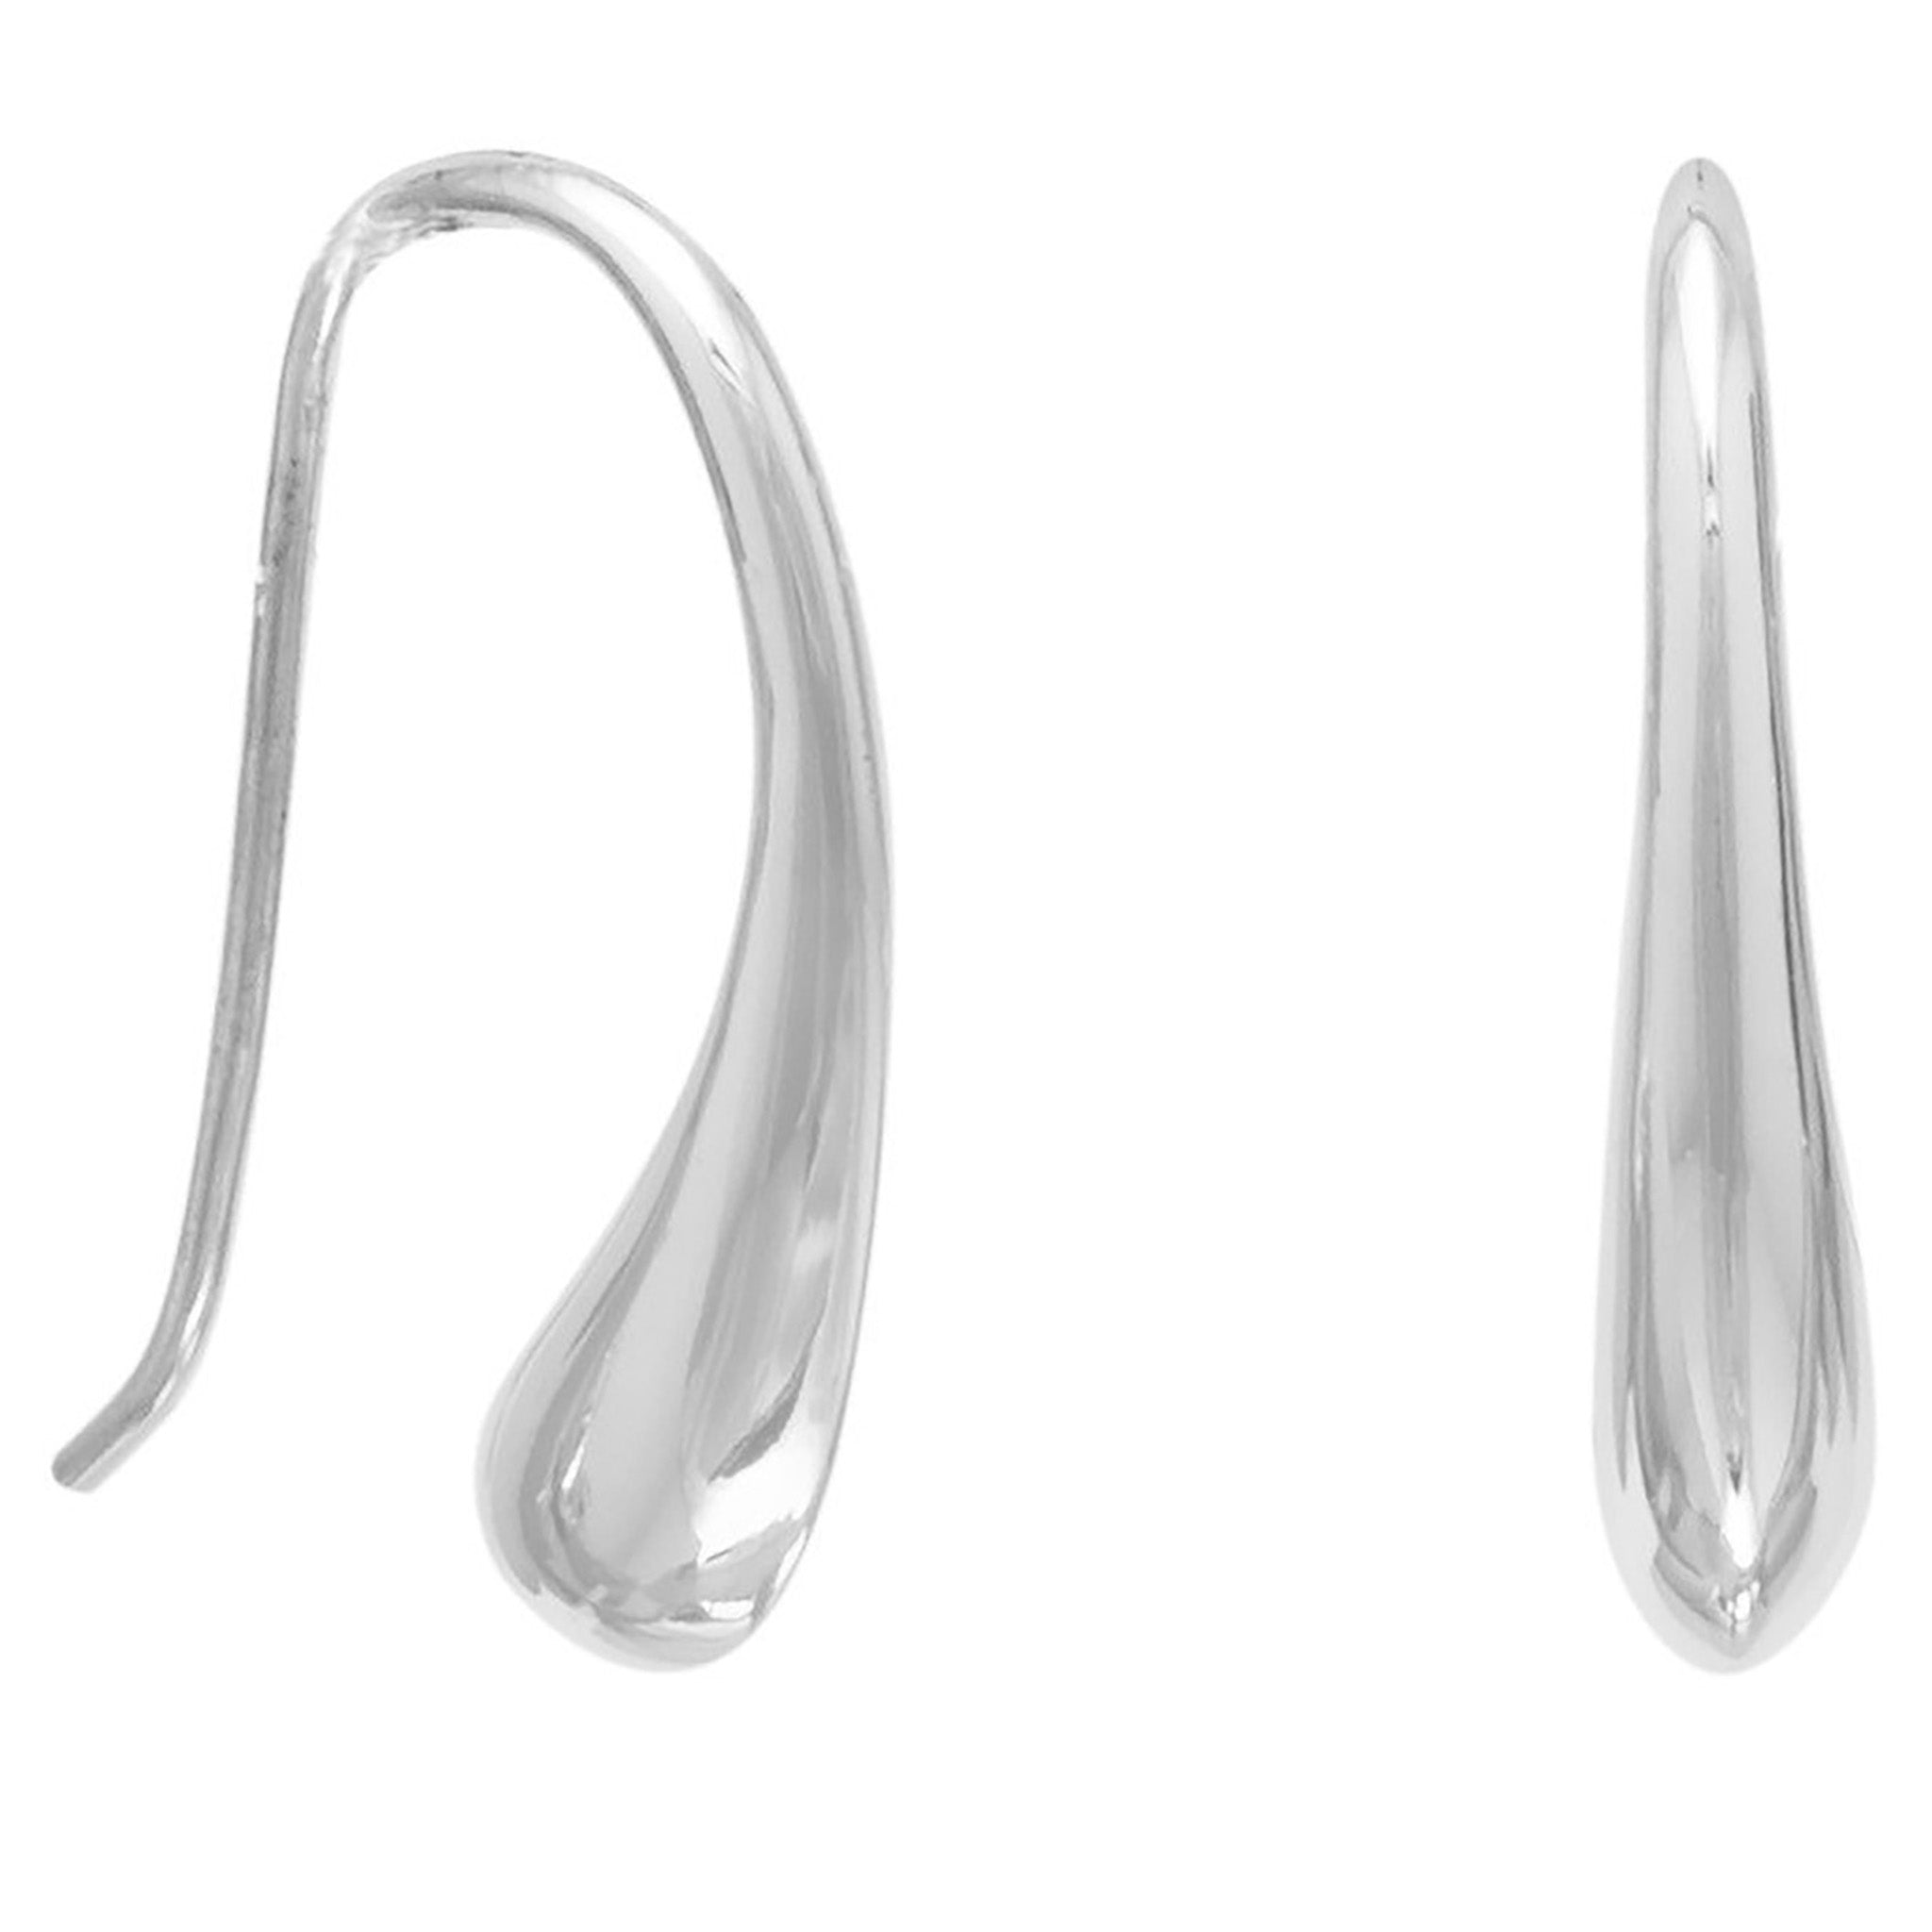 Curved Pear Shape Silver Earrings